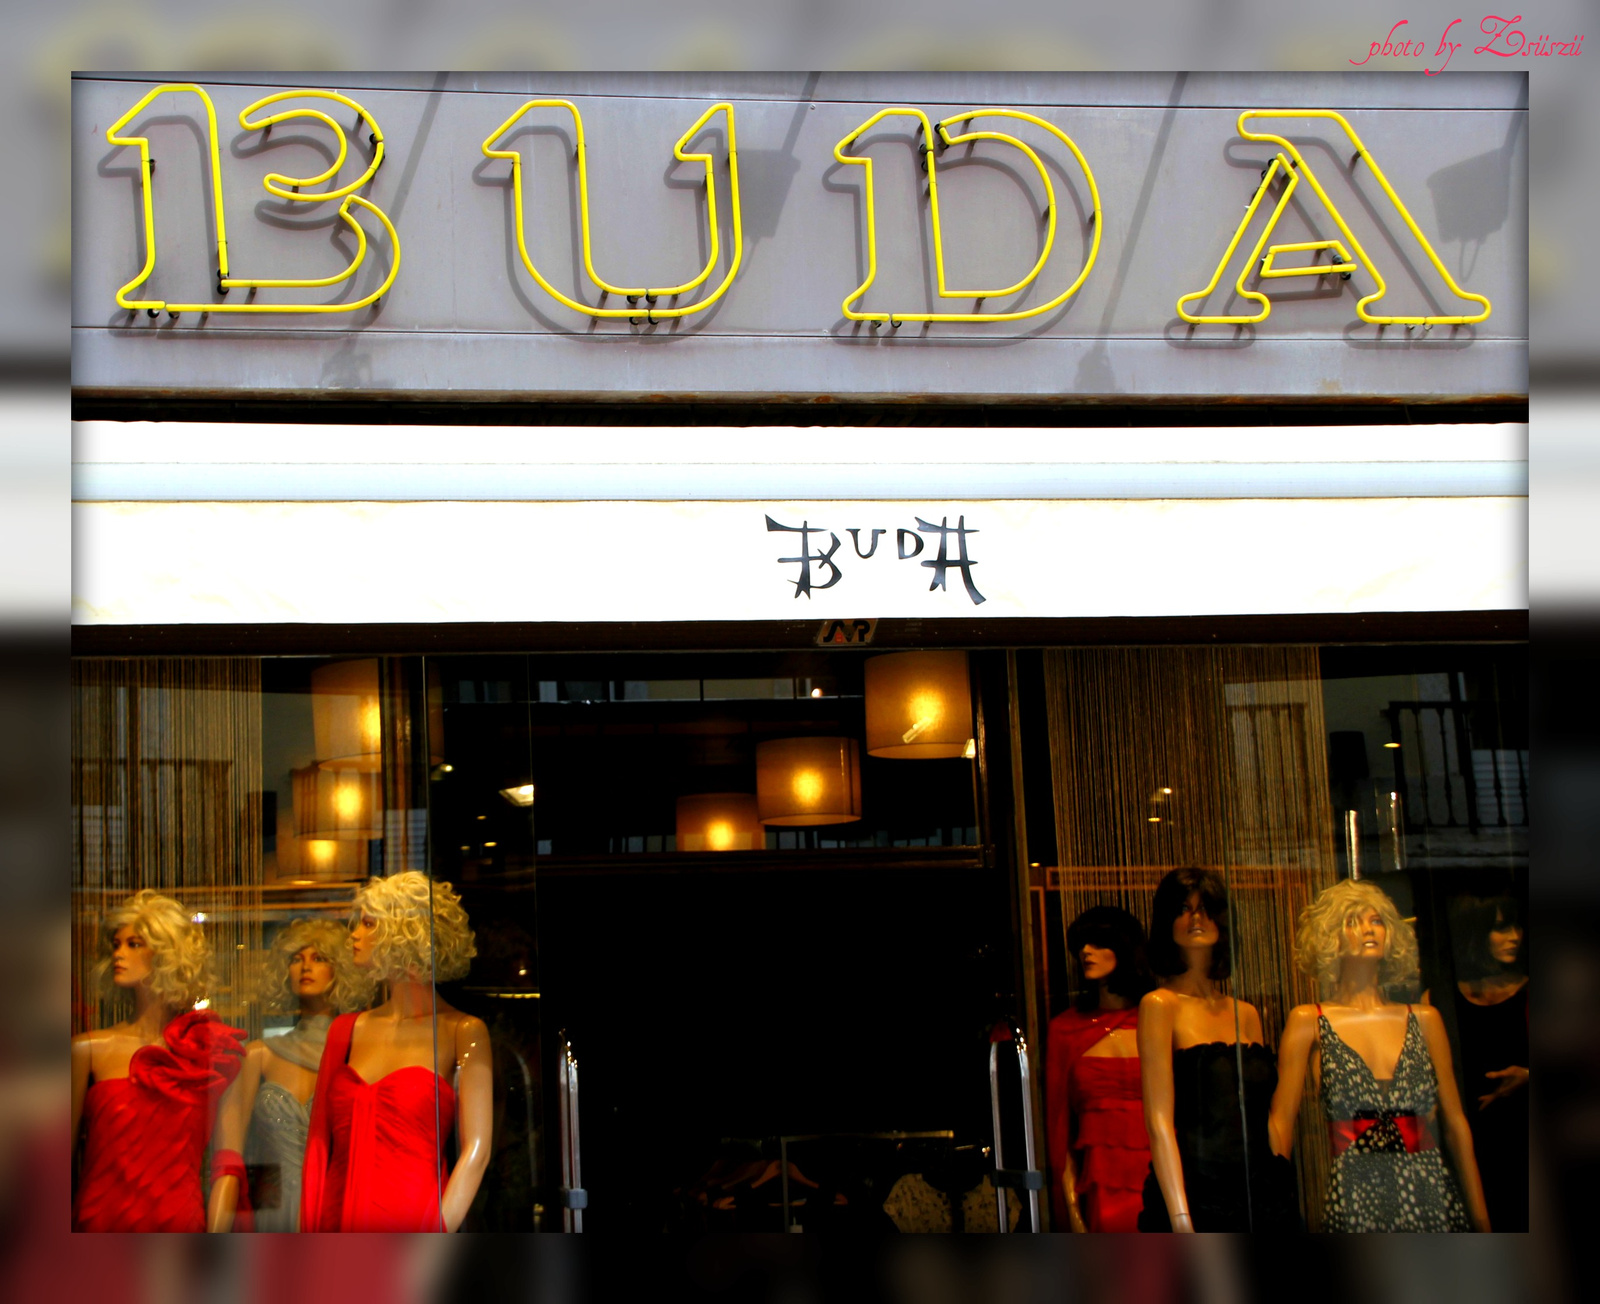 Buda (Buddha) - butik